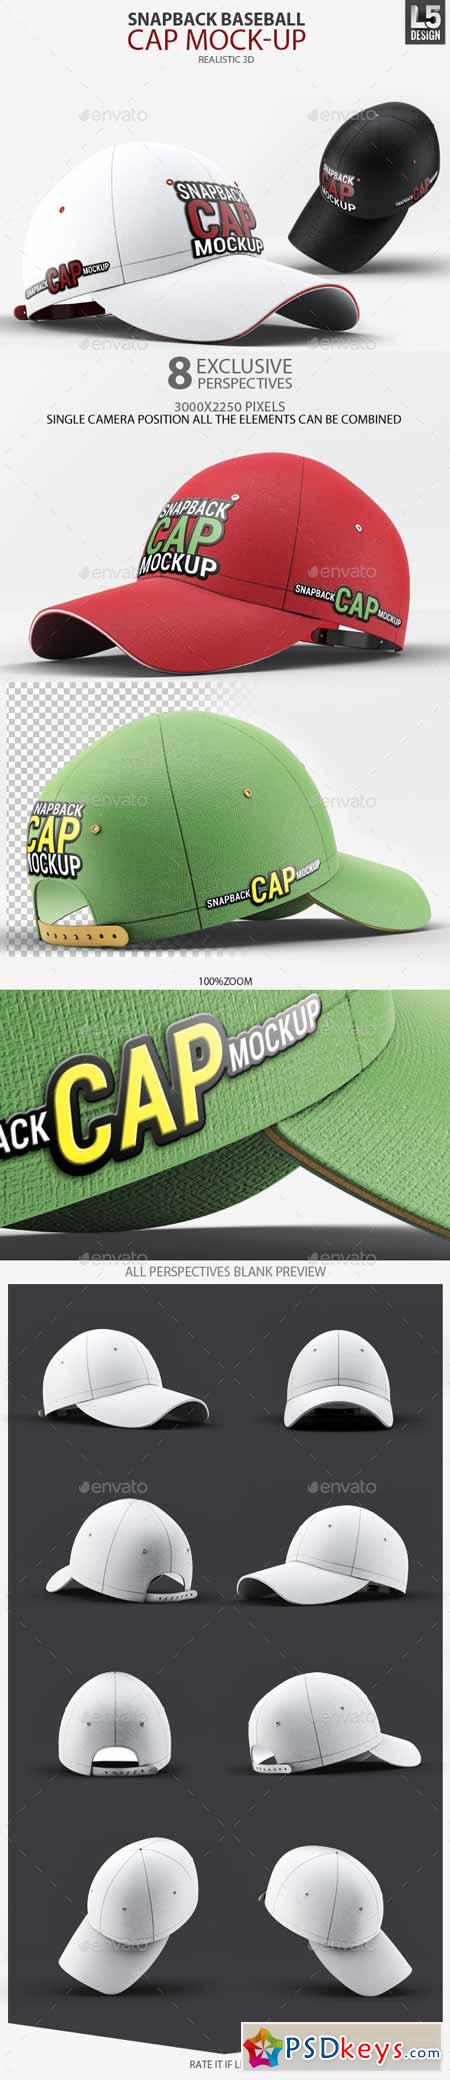 Download Snapback Baseball Cap Mock-Up 11315441 » Free Download ...